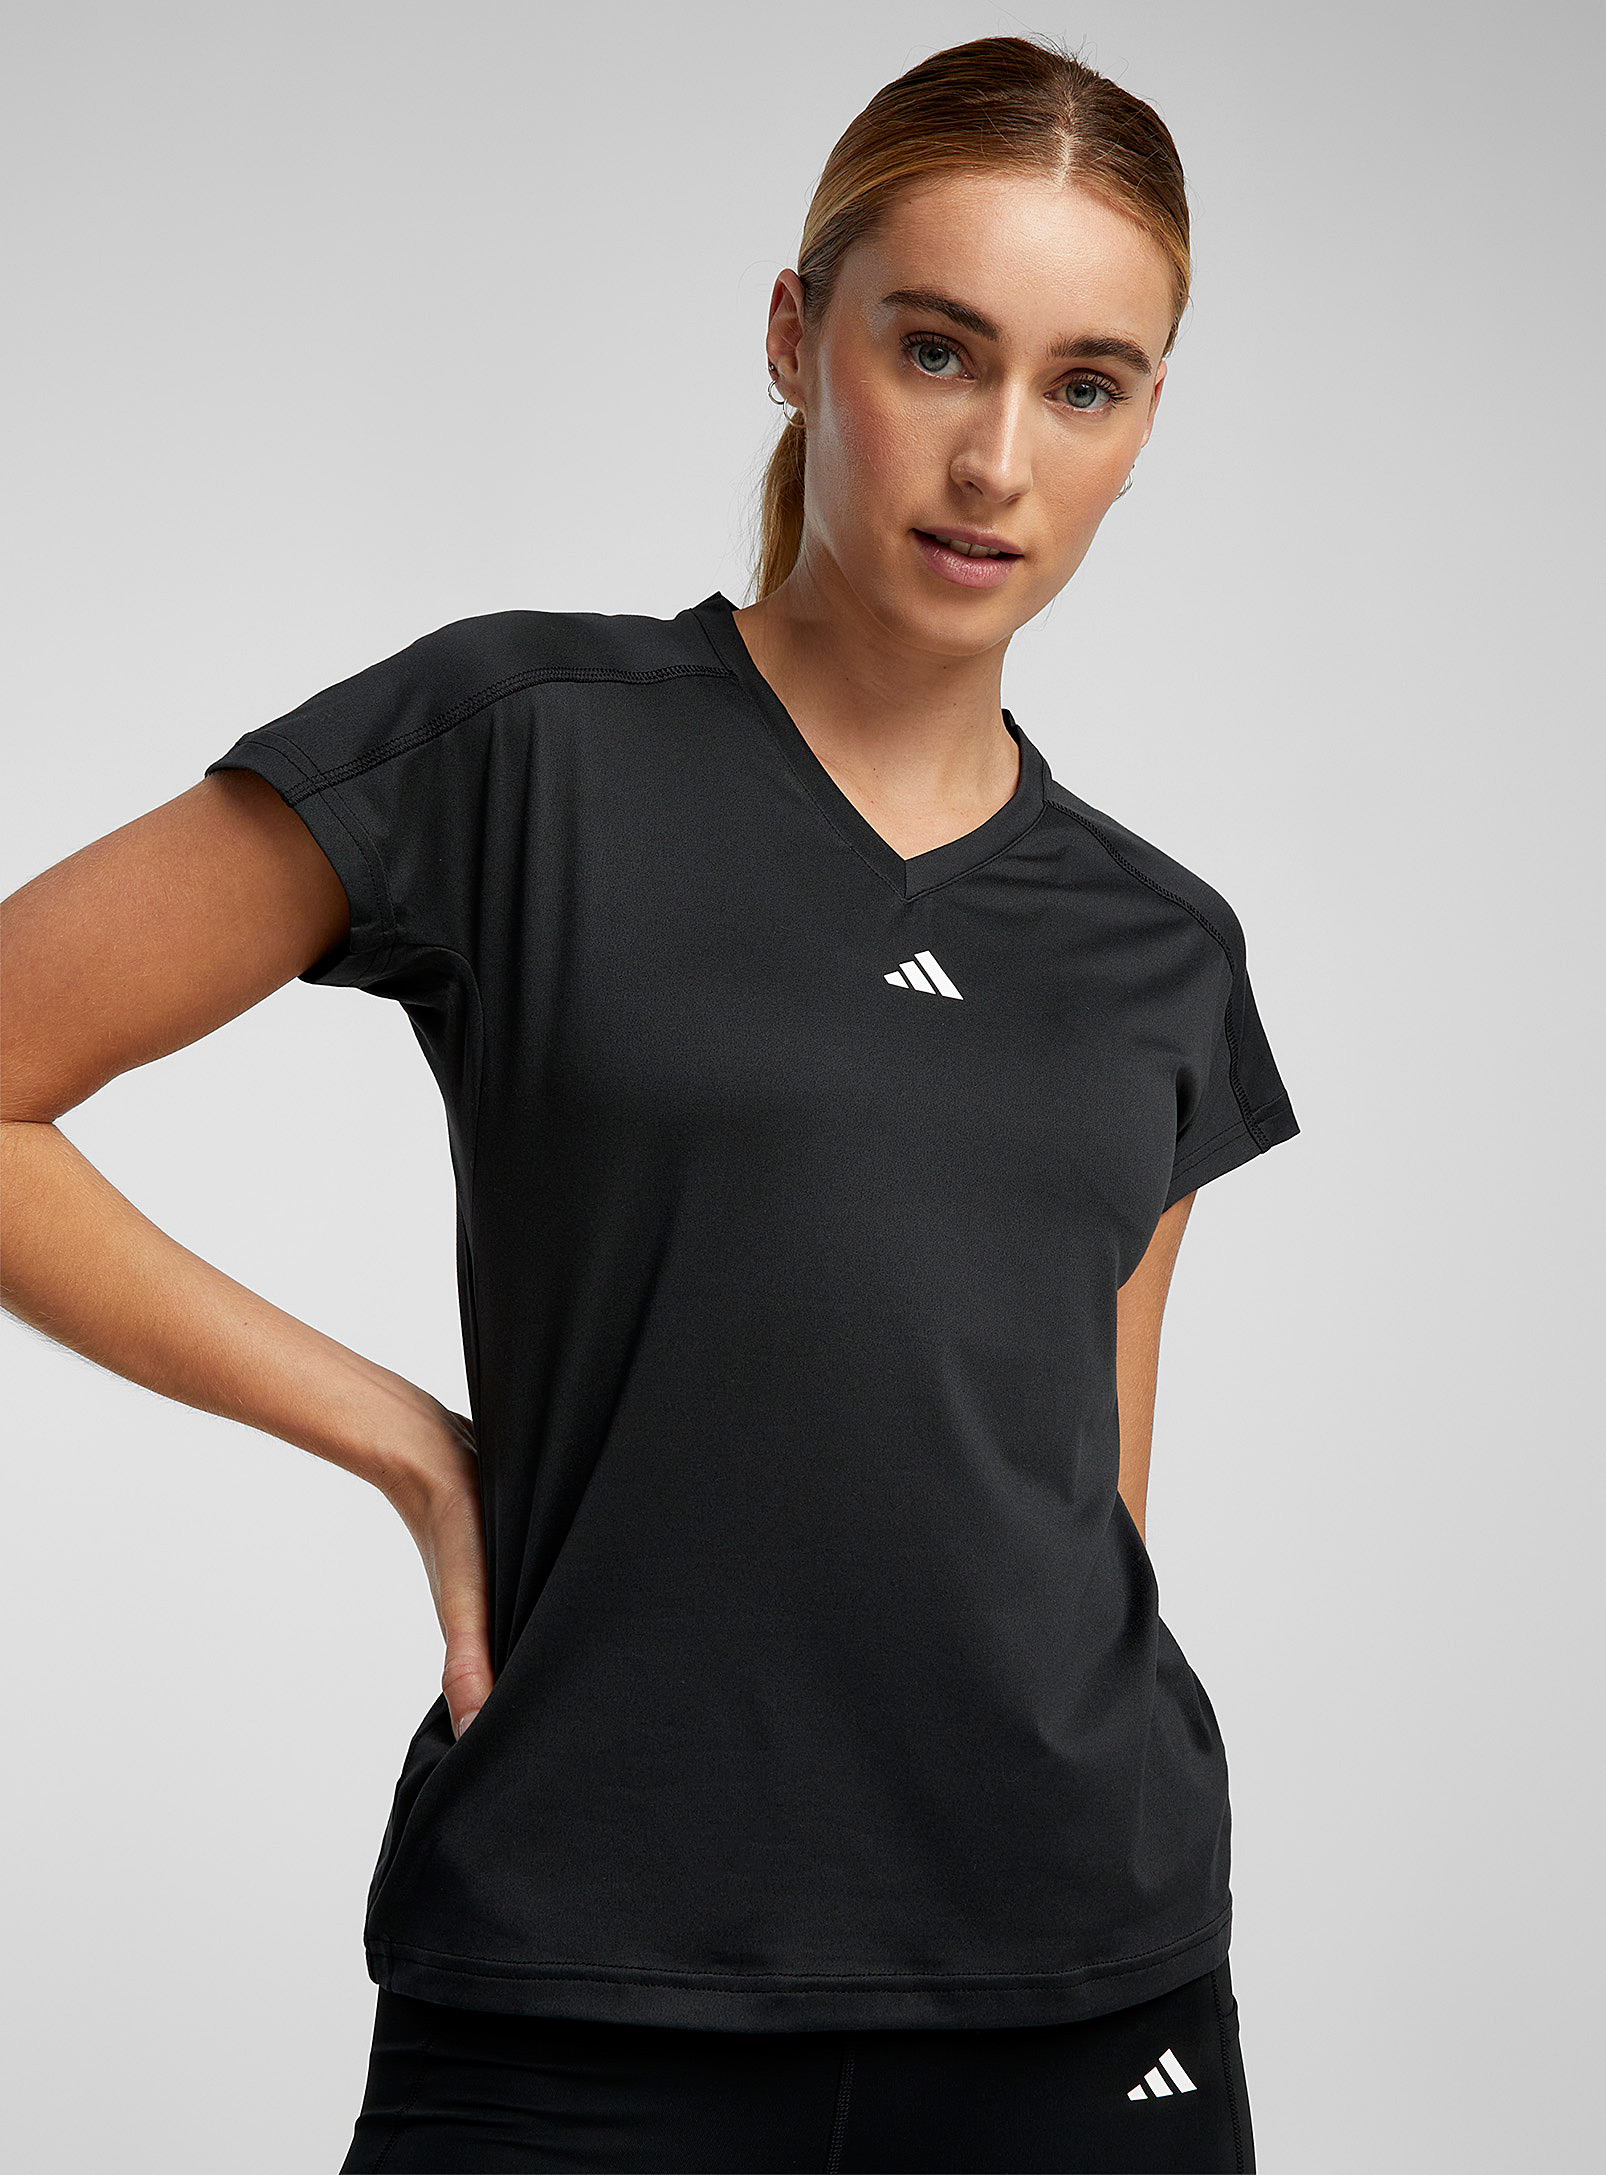 Adidas - Women's V-neck raglan Tee Shirt